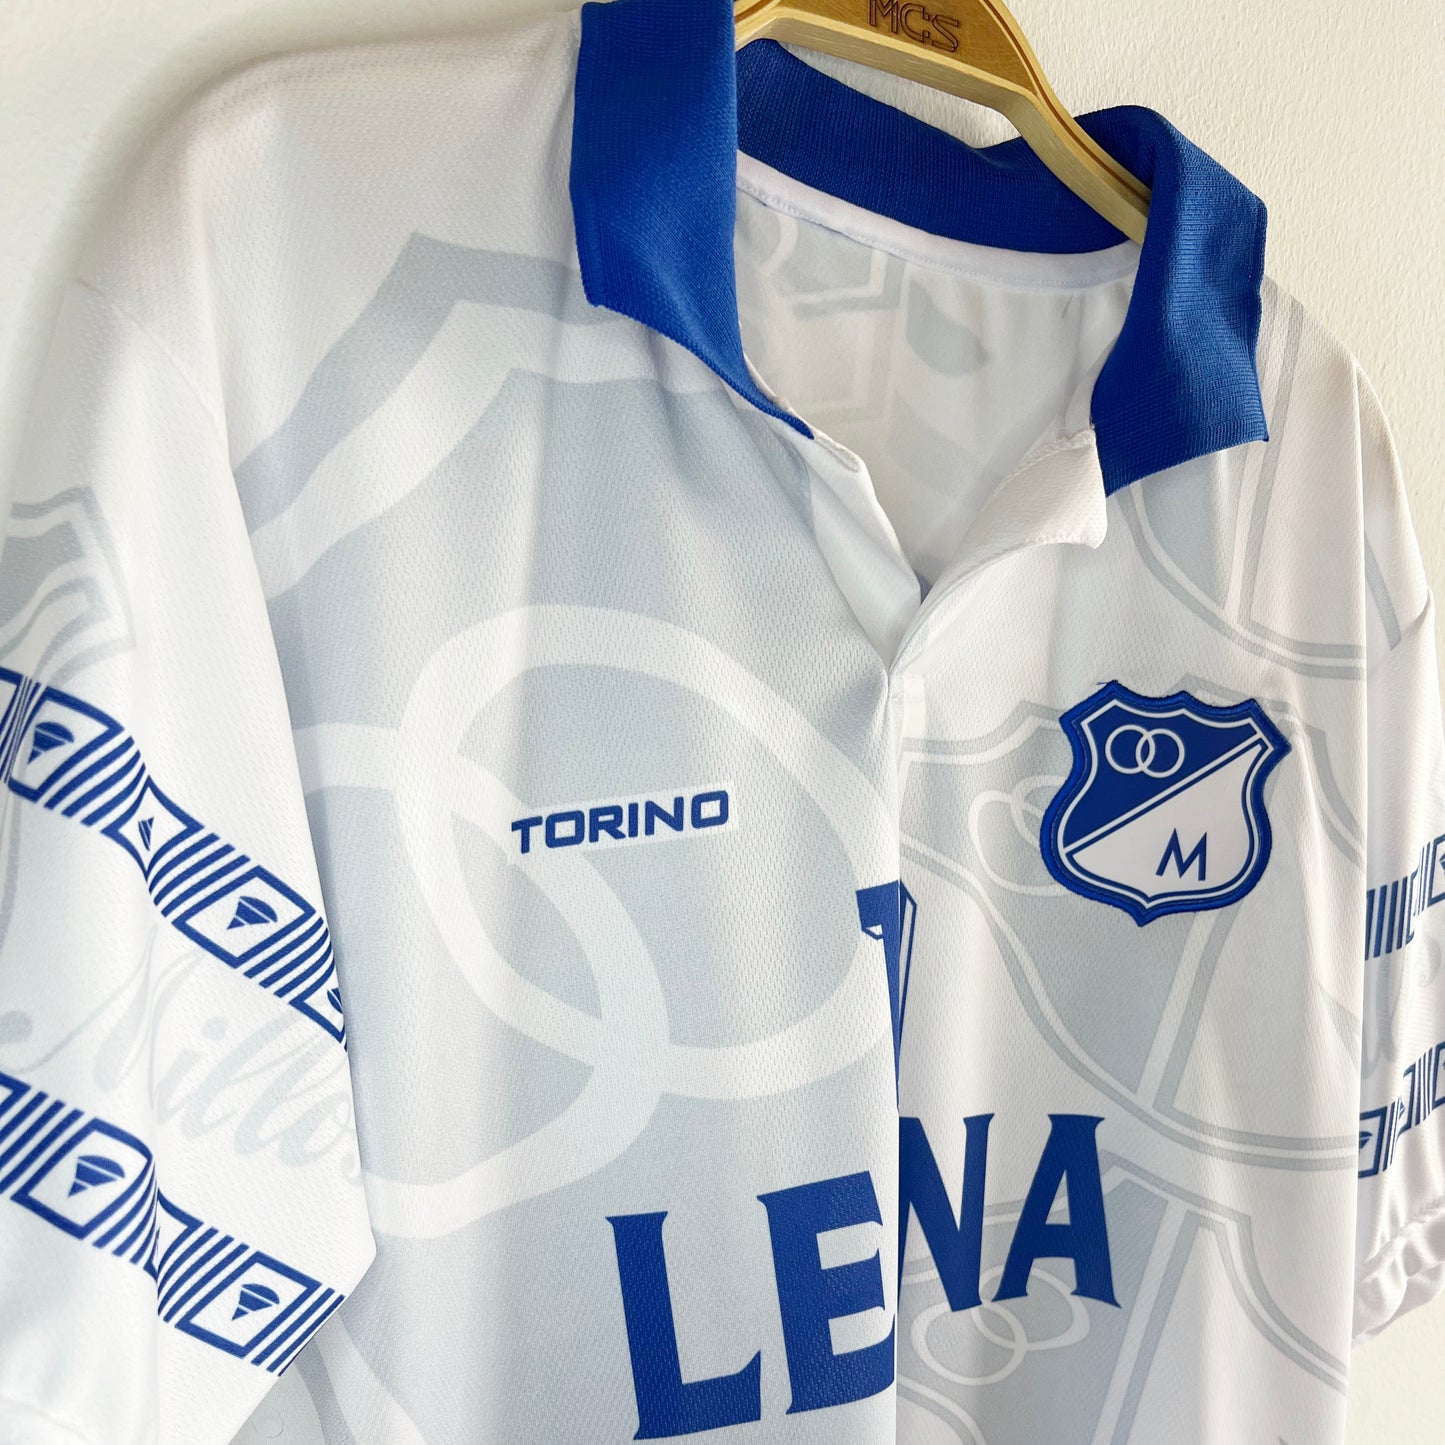 Camiseta Millonarios Torino 1997